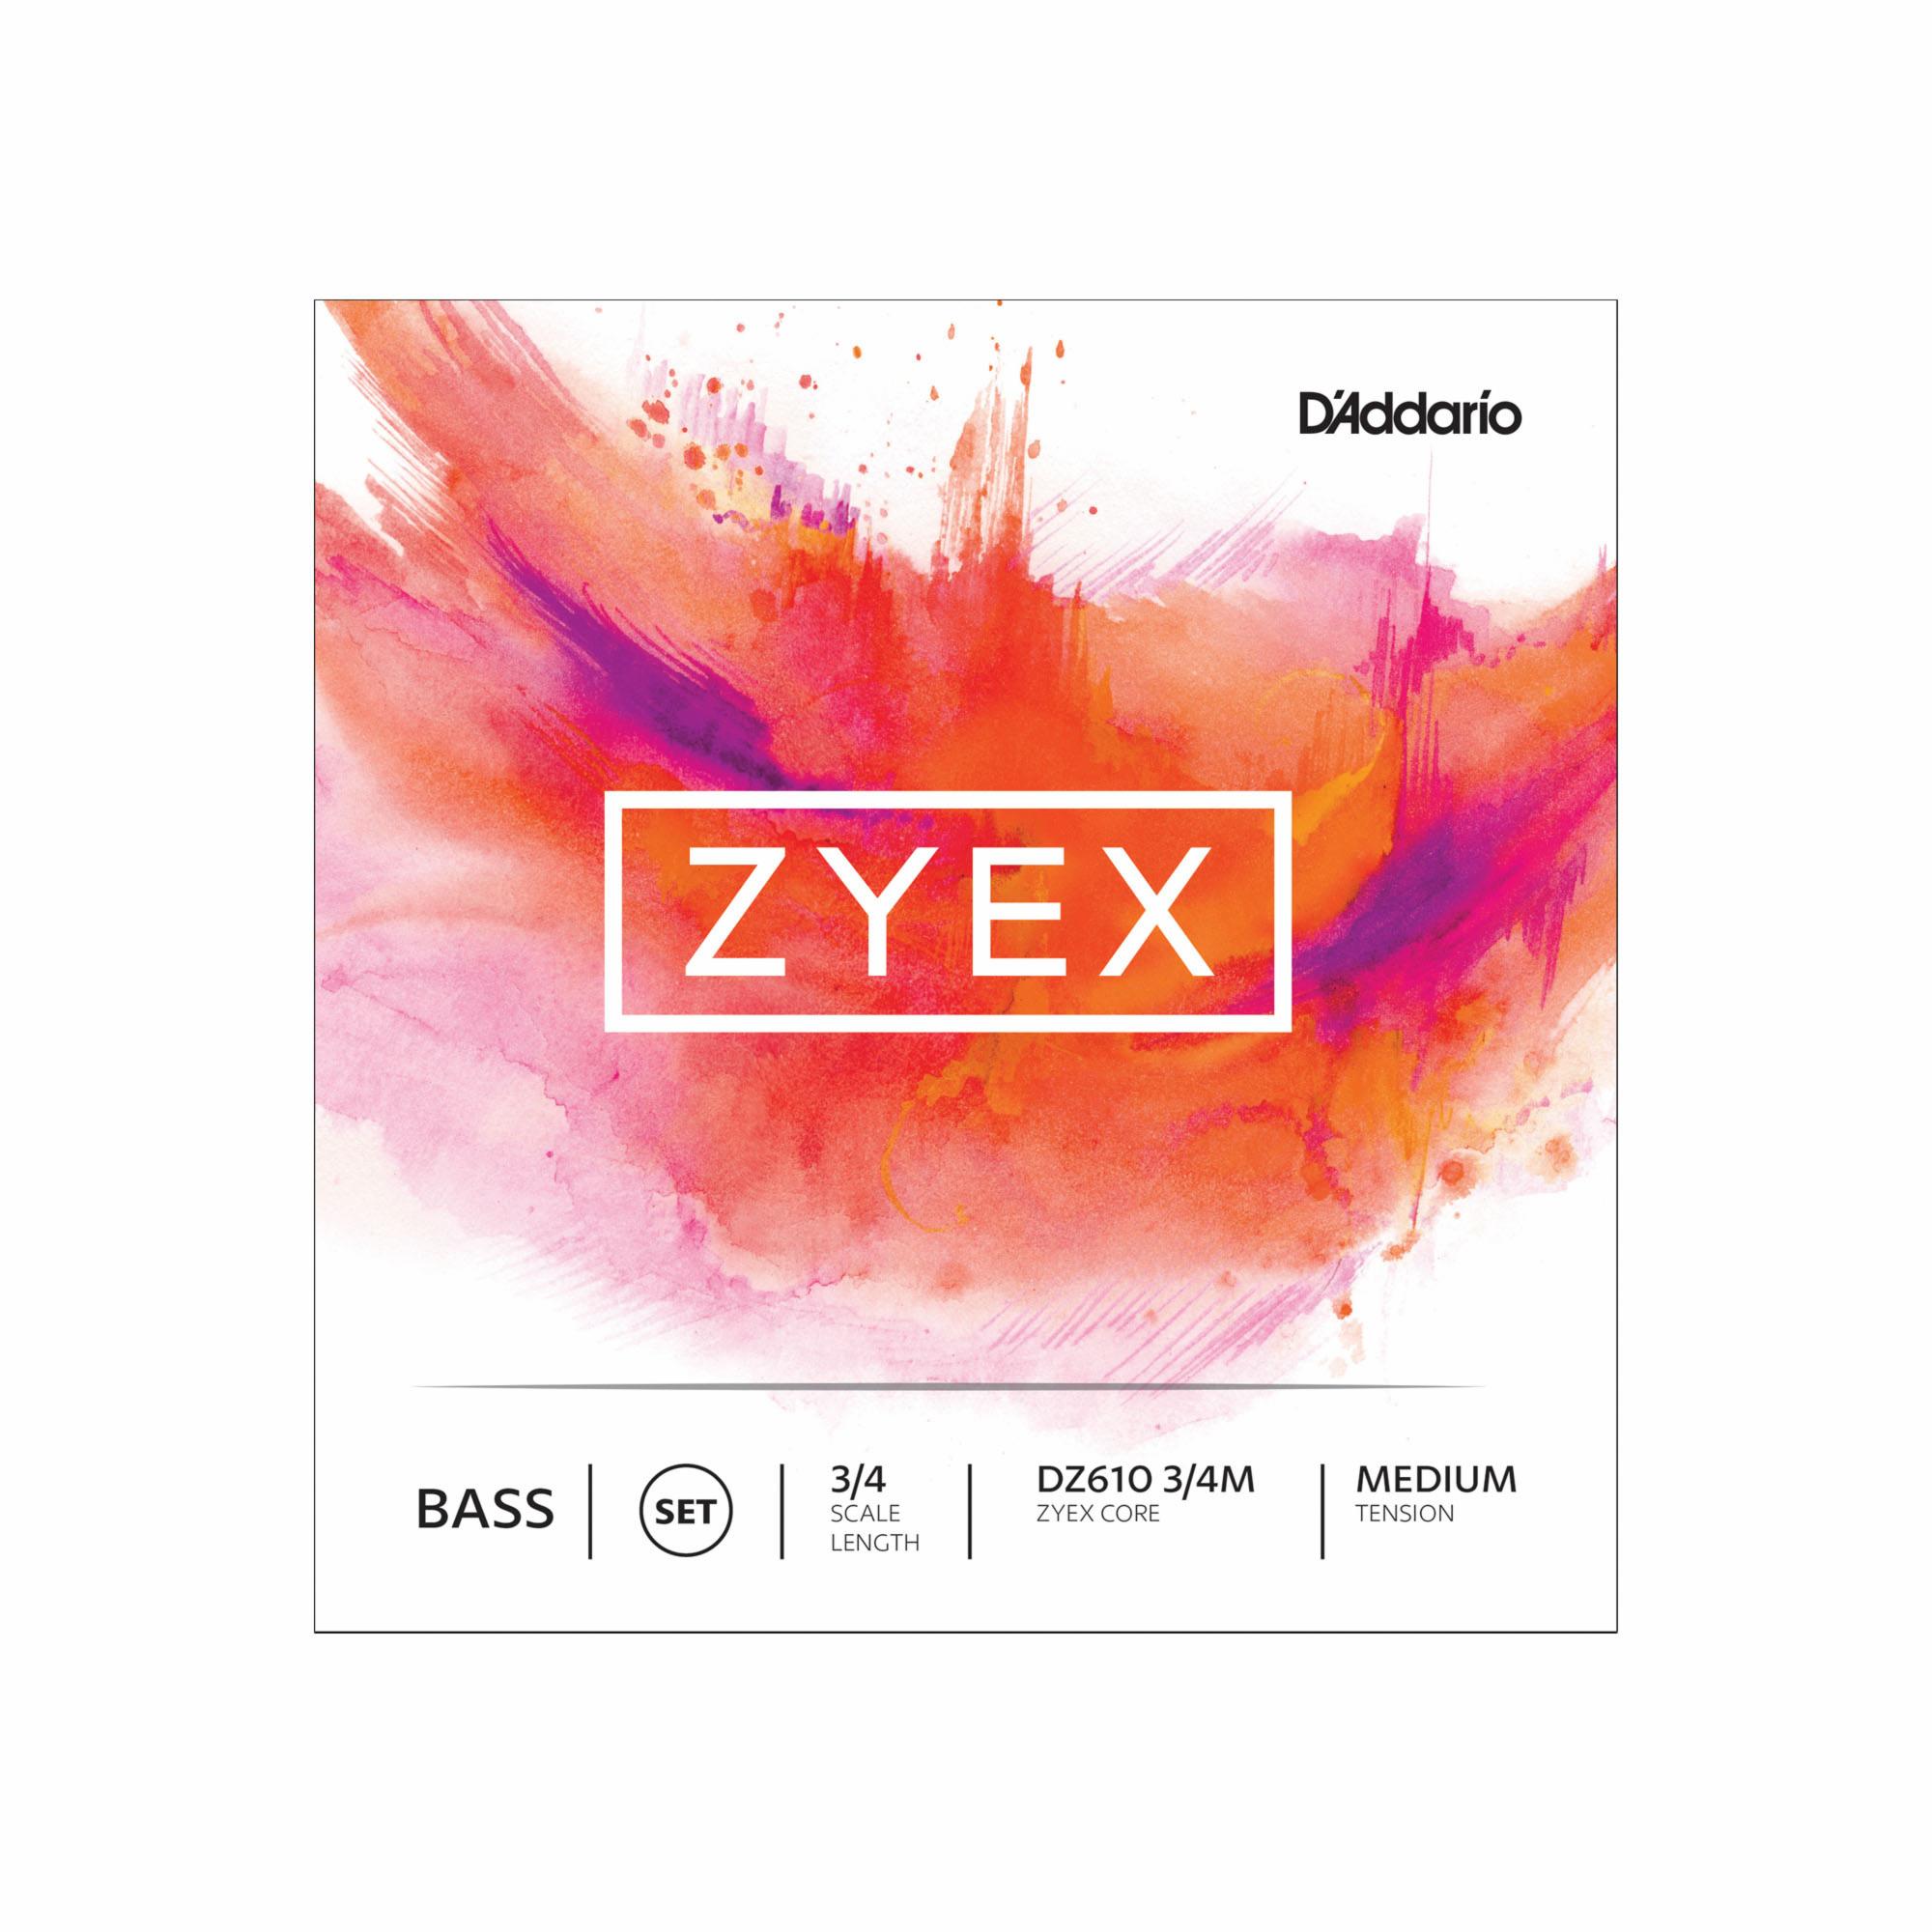 D'Addario Zyex Bass Strings